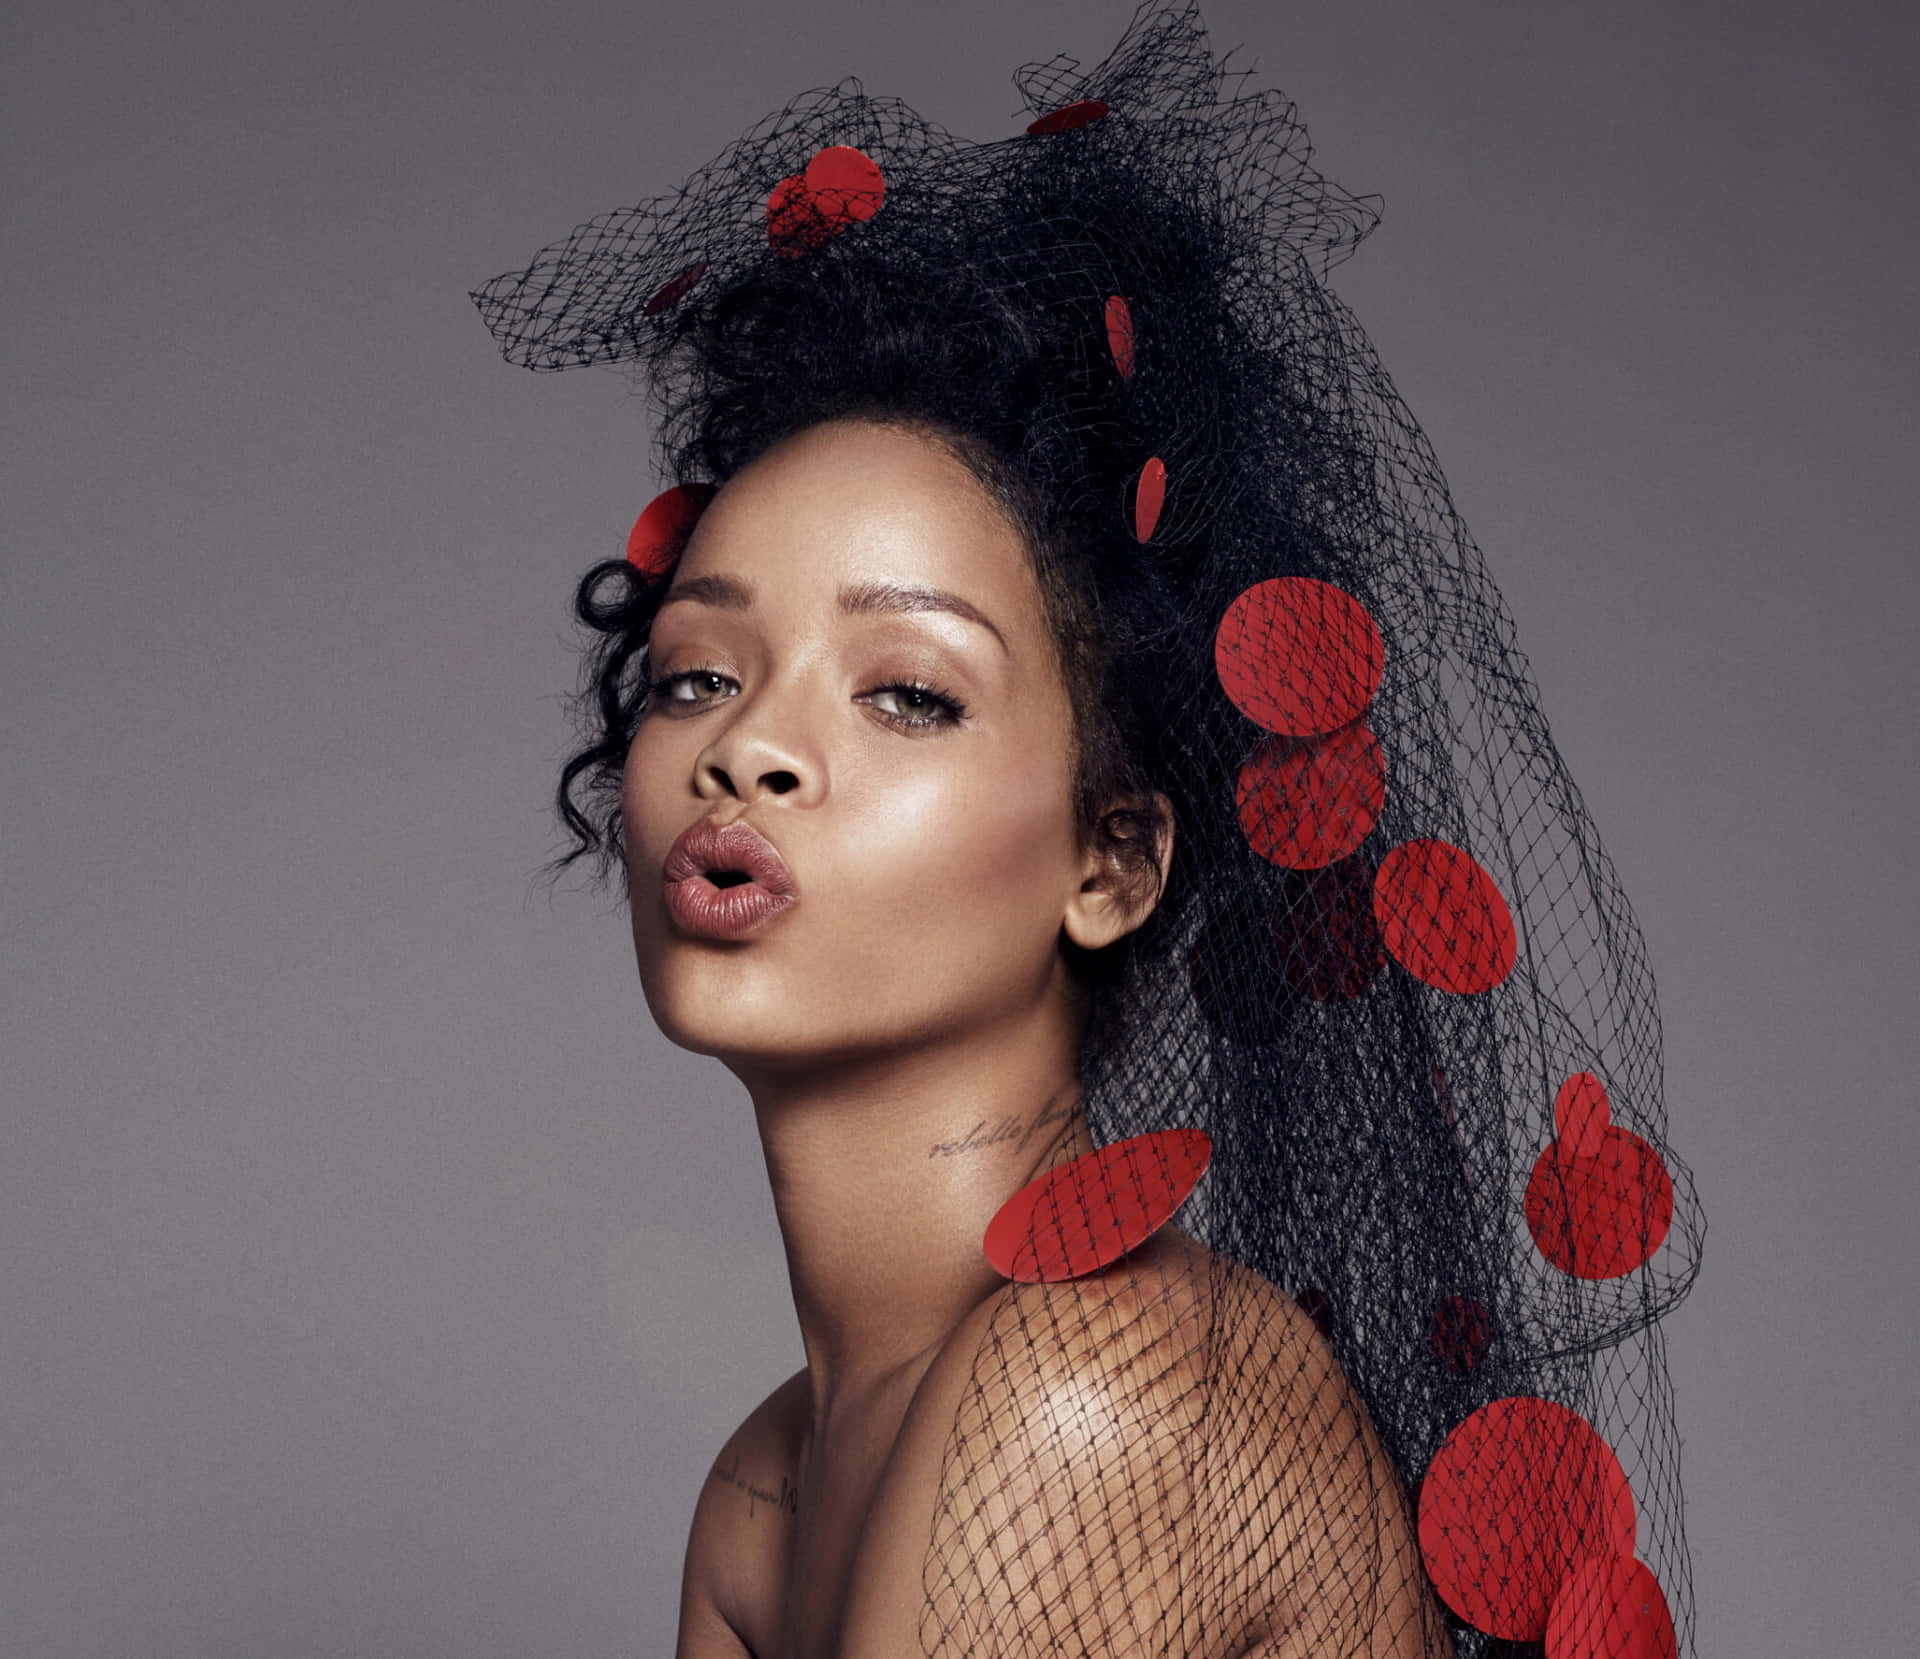 Popikone, Rihanna